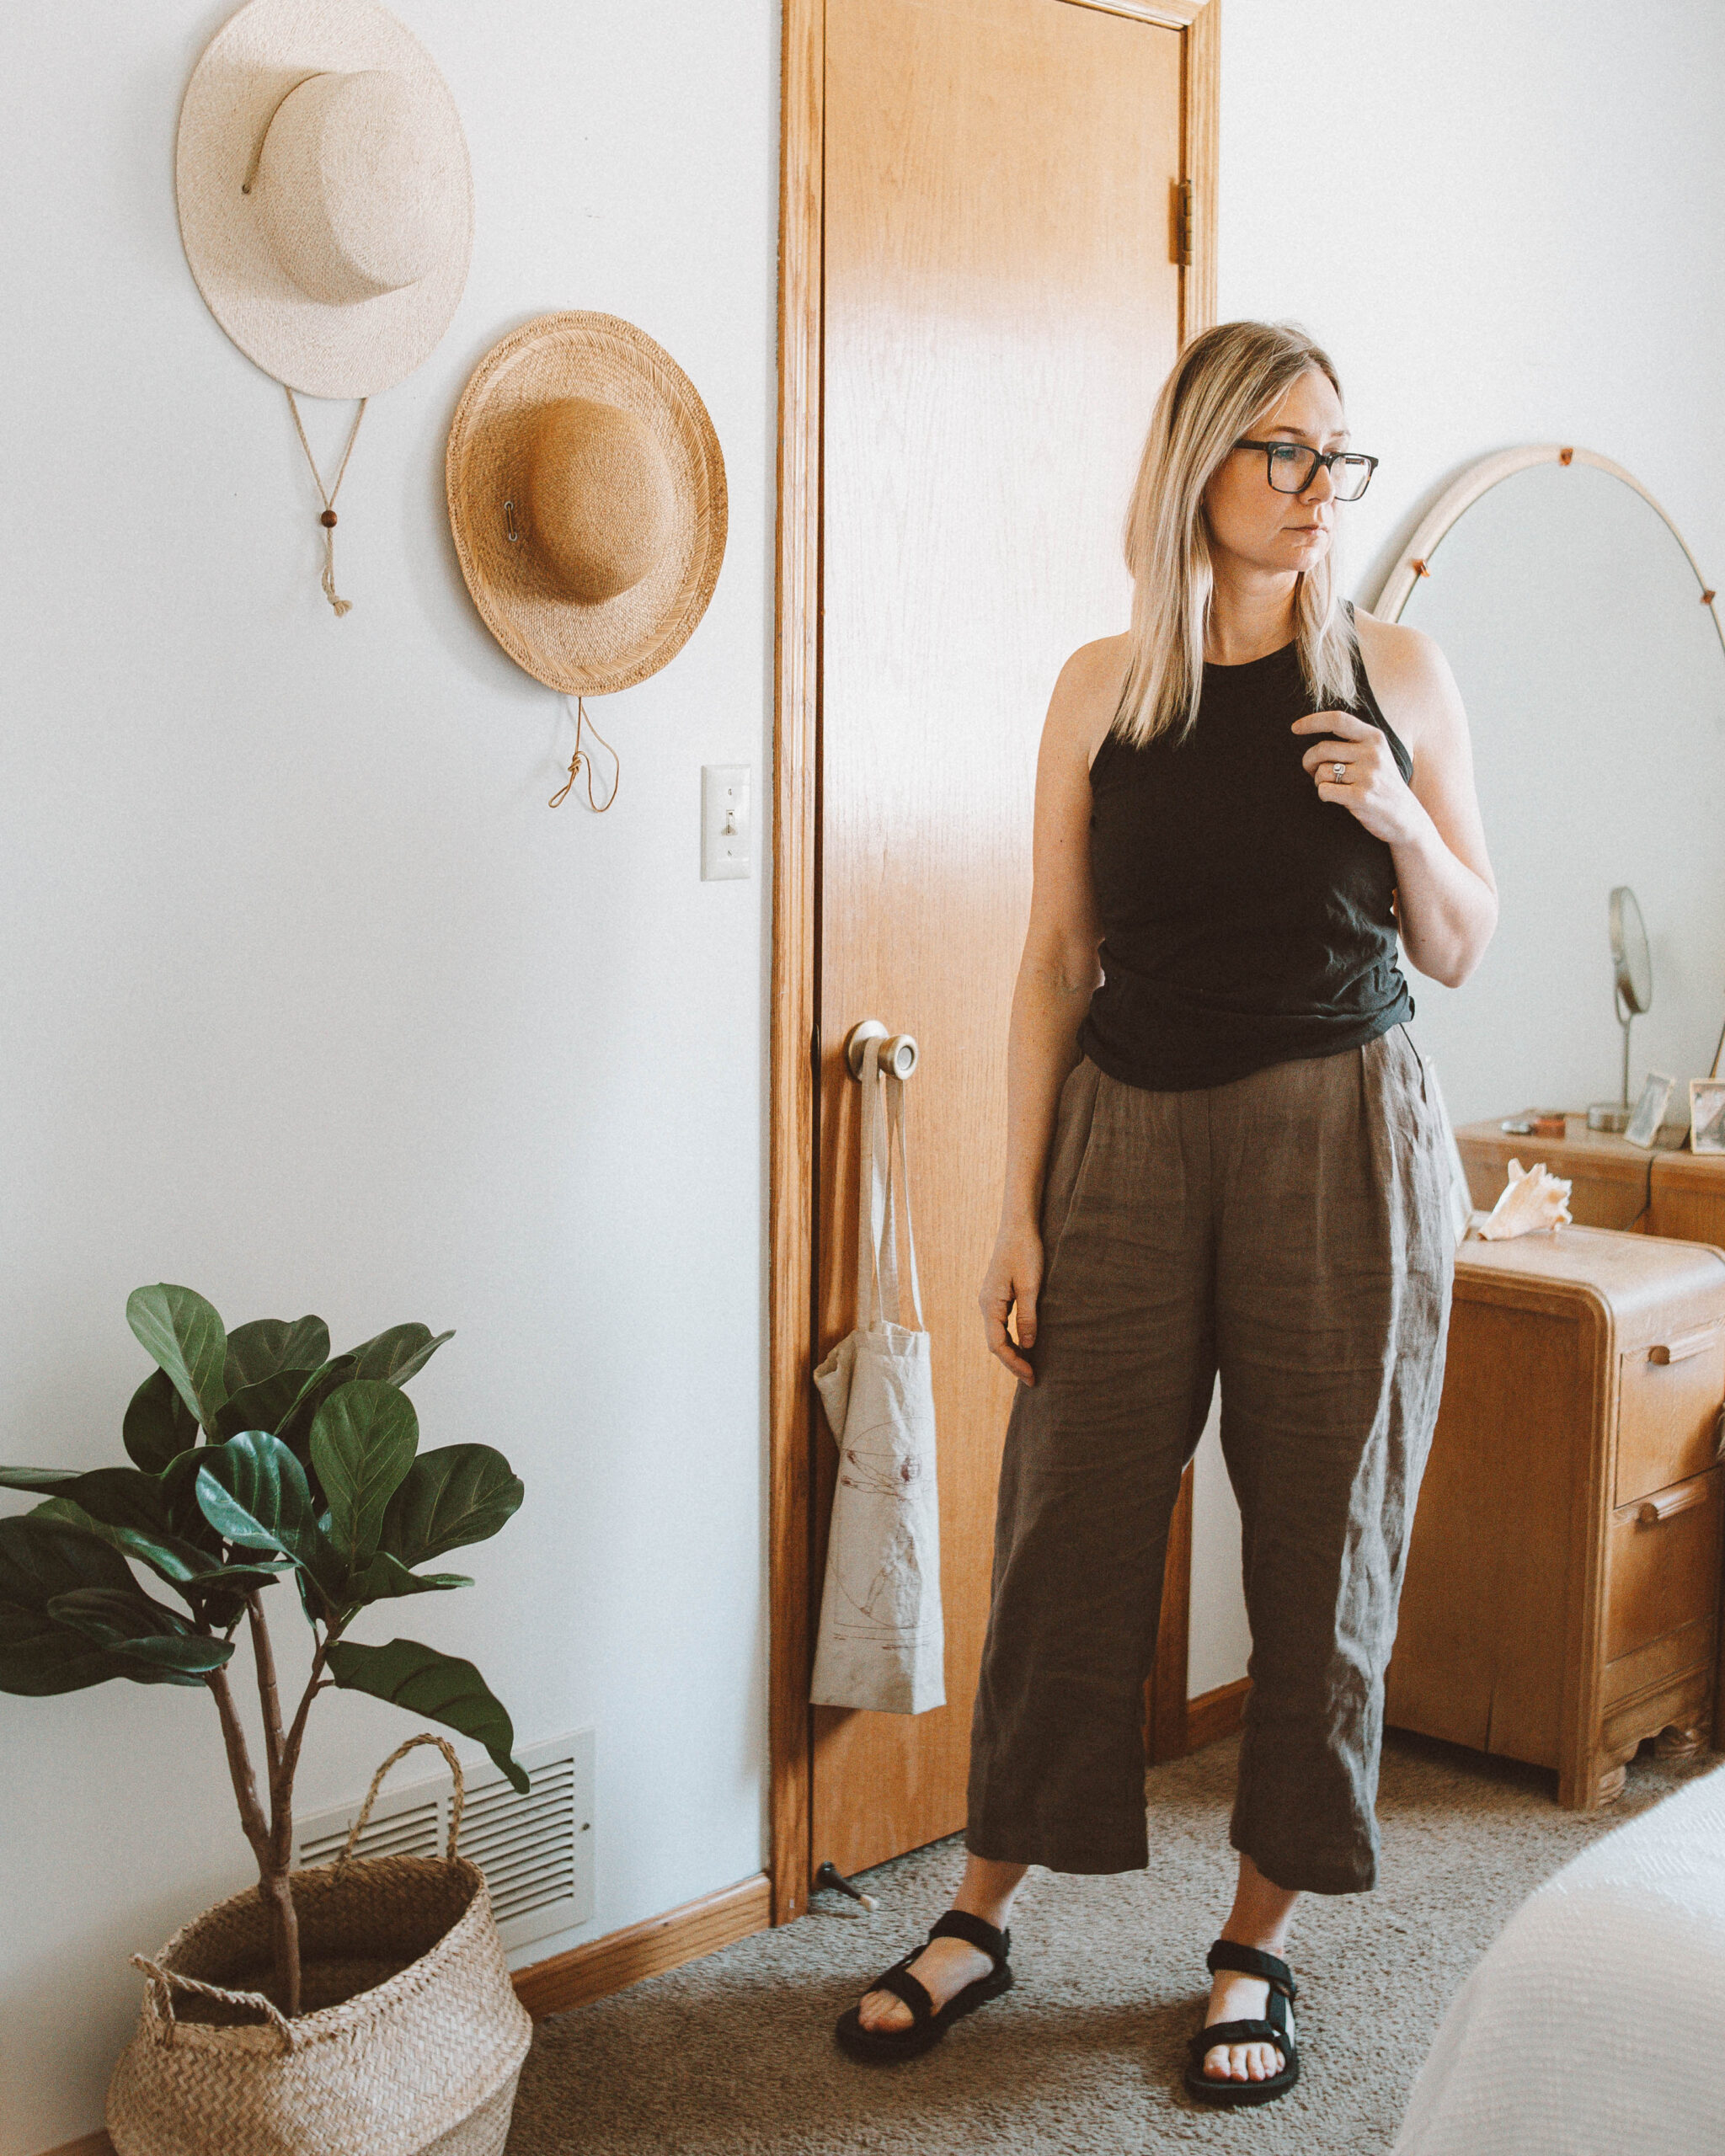 Linen Loungewear: 5 Comfy Outfit Ideas